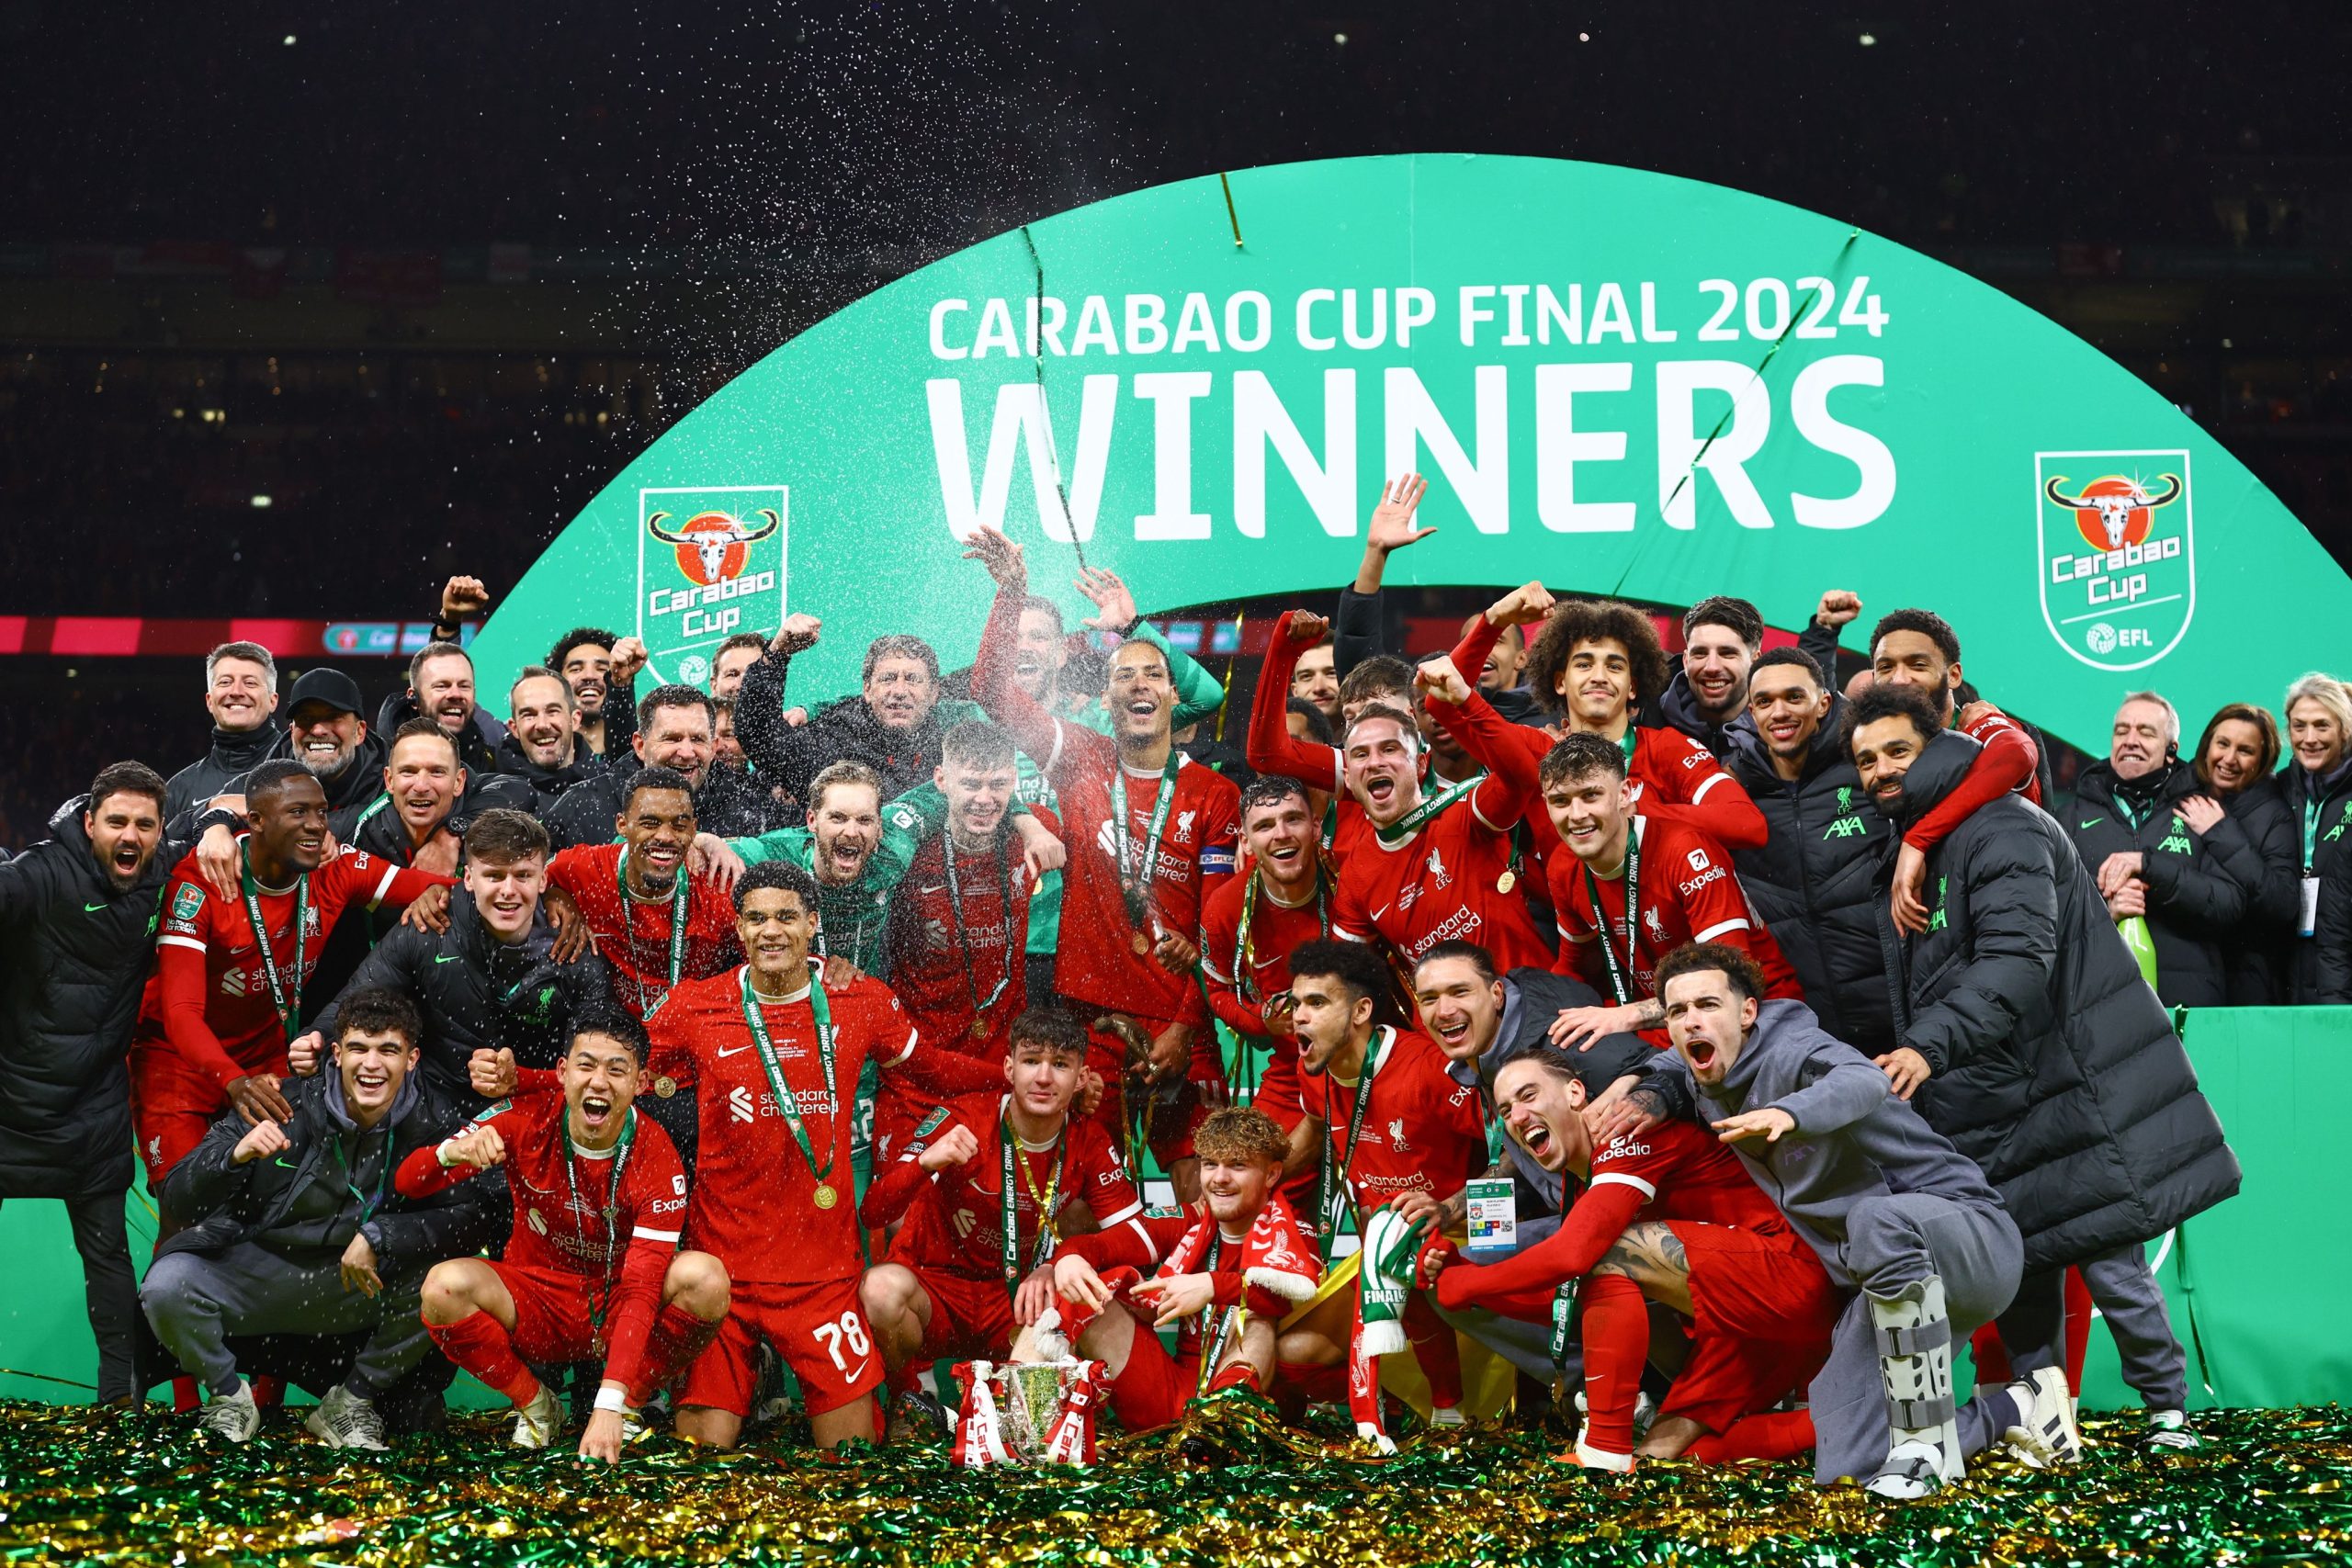 Liverpool (Foto: Twitter/Carabao_Cup)